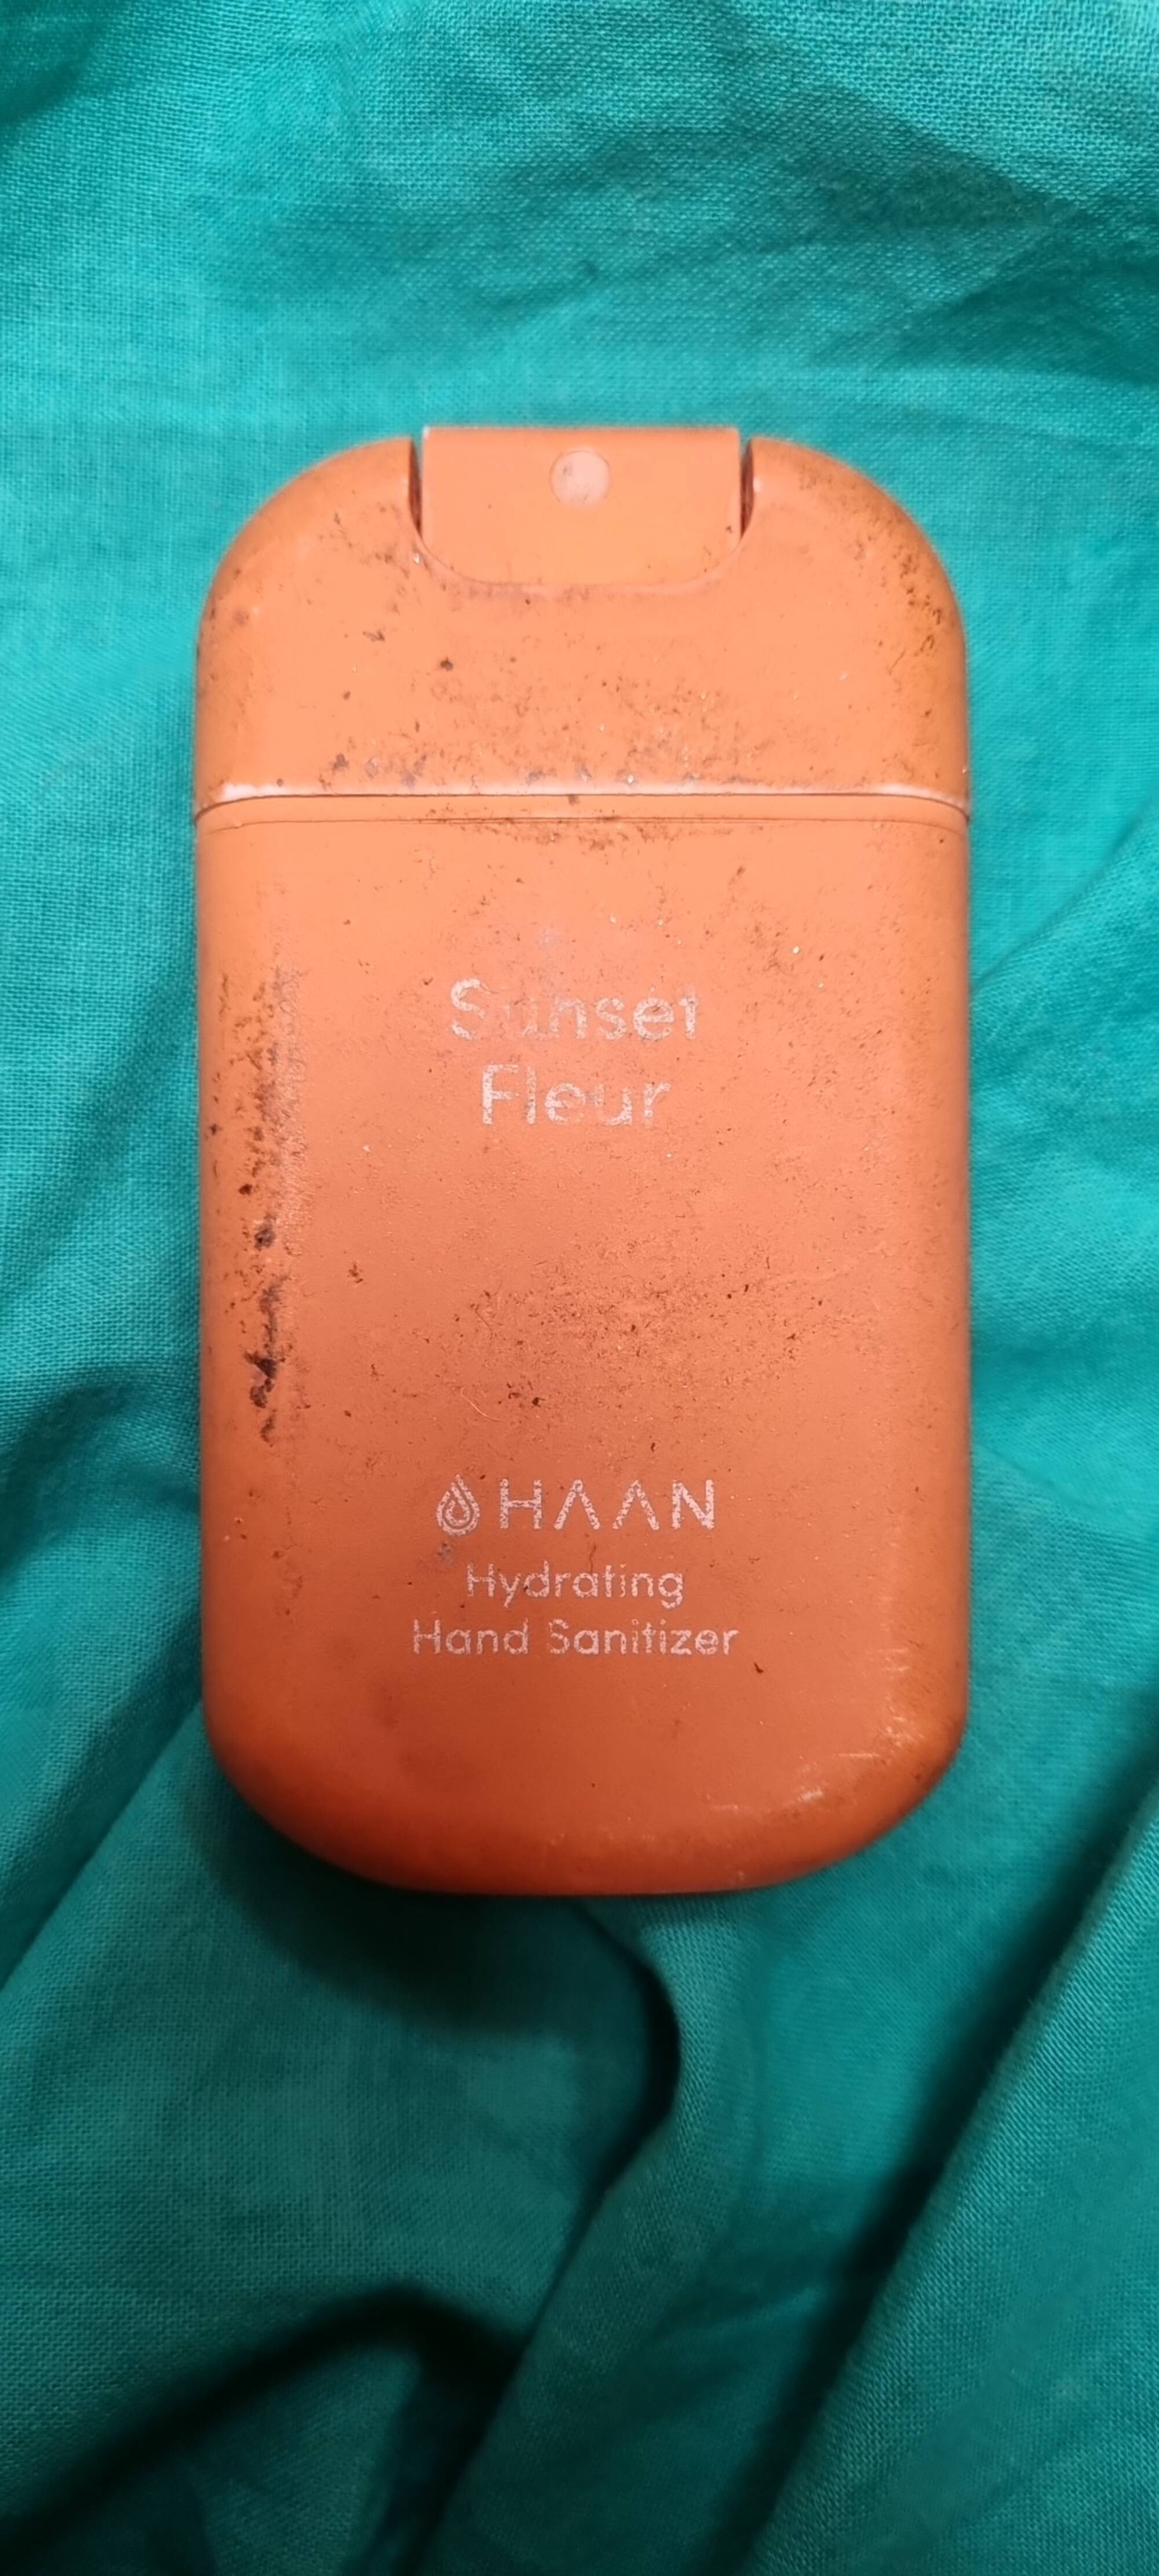 HAAN - Hydrating hand sanitizer